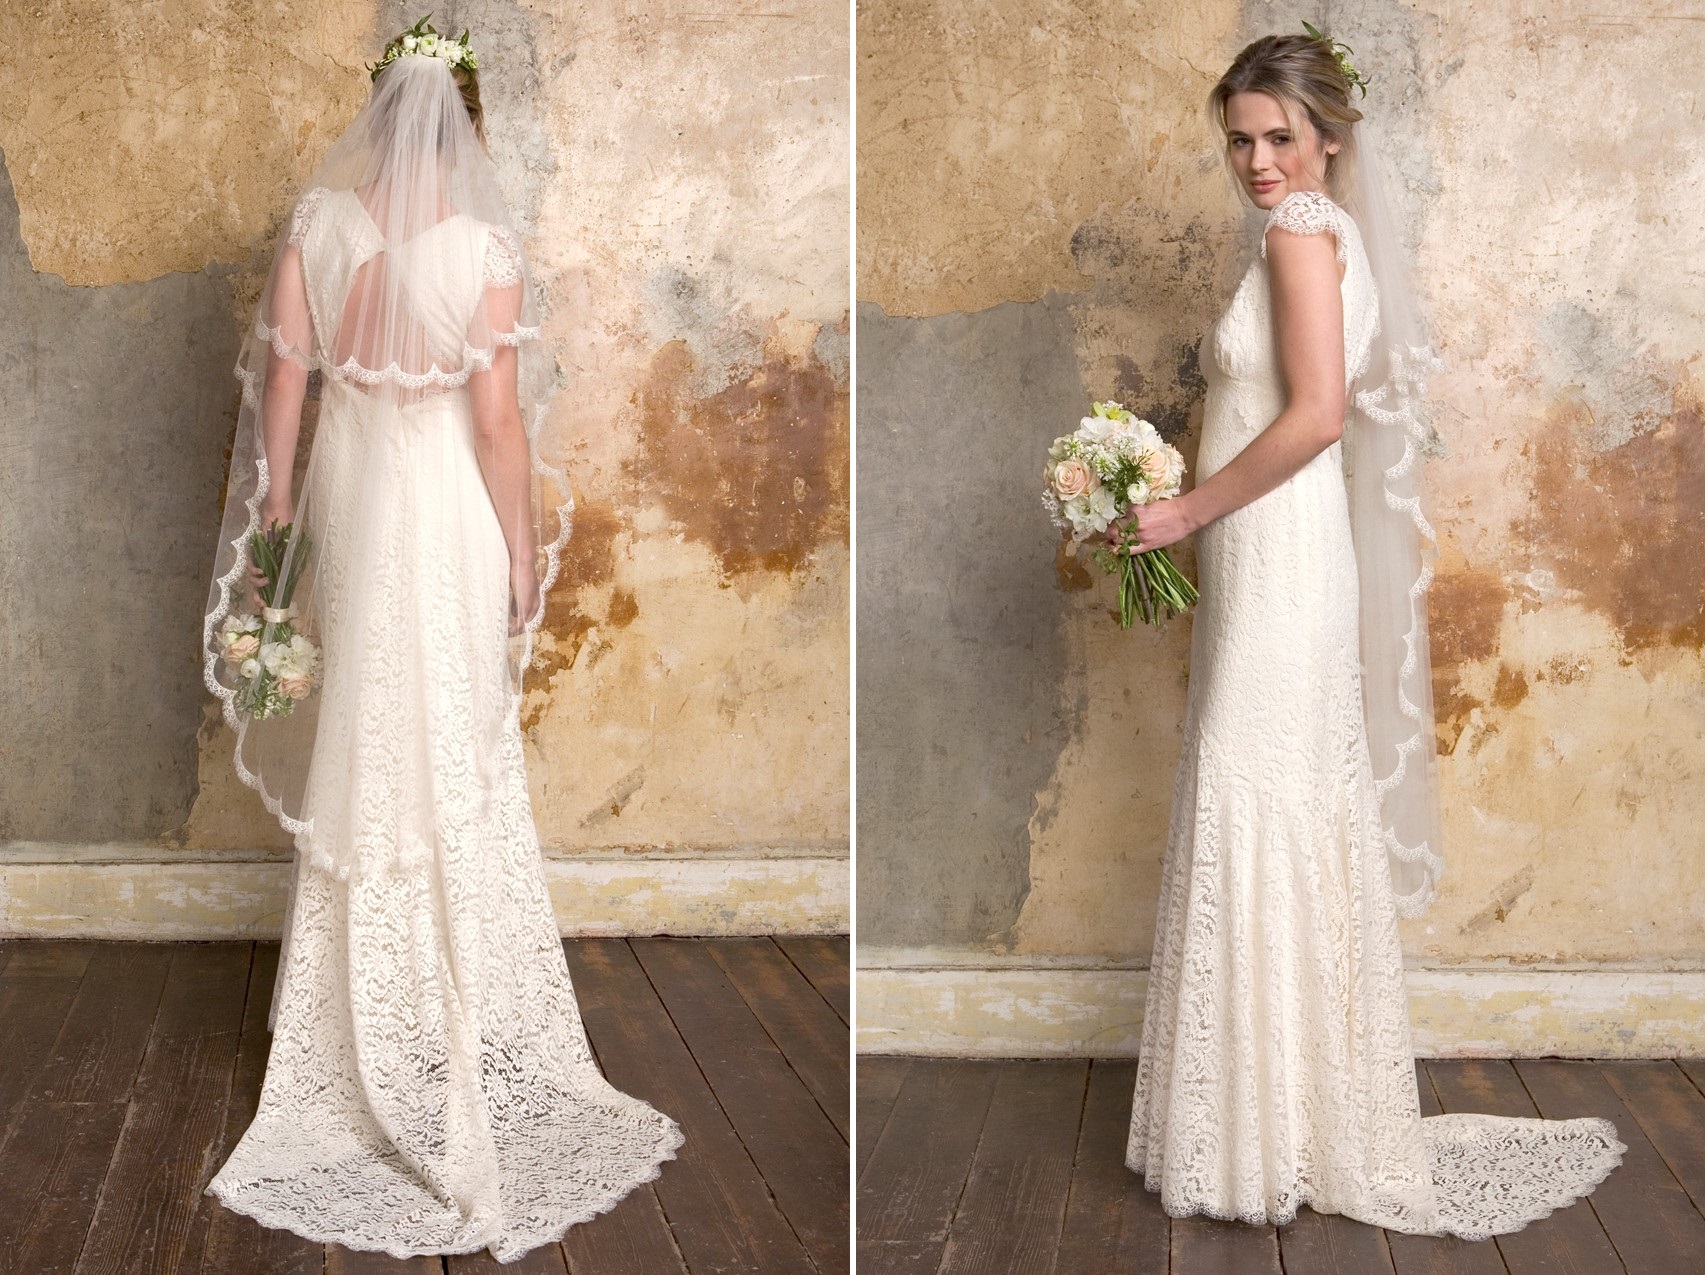 Sally Lacock Elise - a lace open-back wedding dress